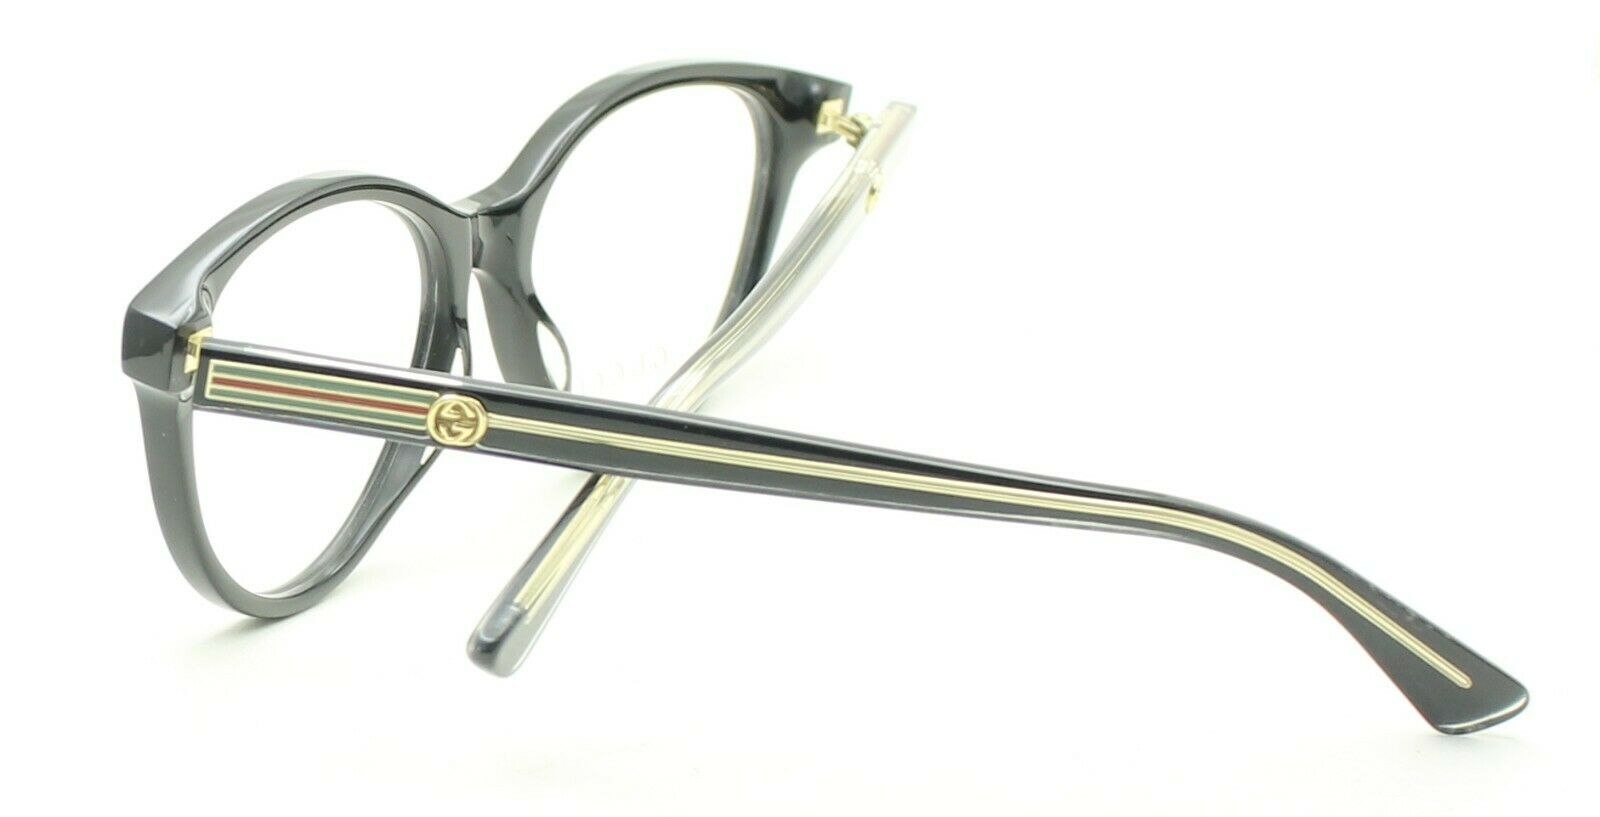 GUCCI GG 0379O 001 52mm Eyewear FRAMES Glasses RX Optical Eyeglasses New - Japan